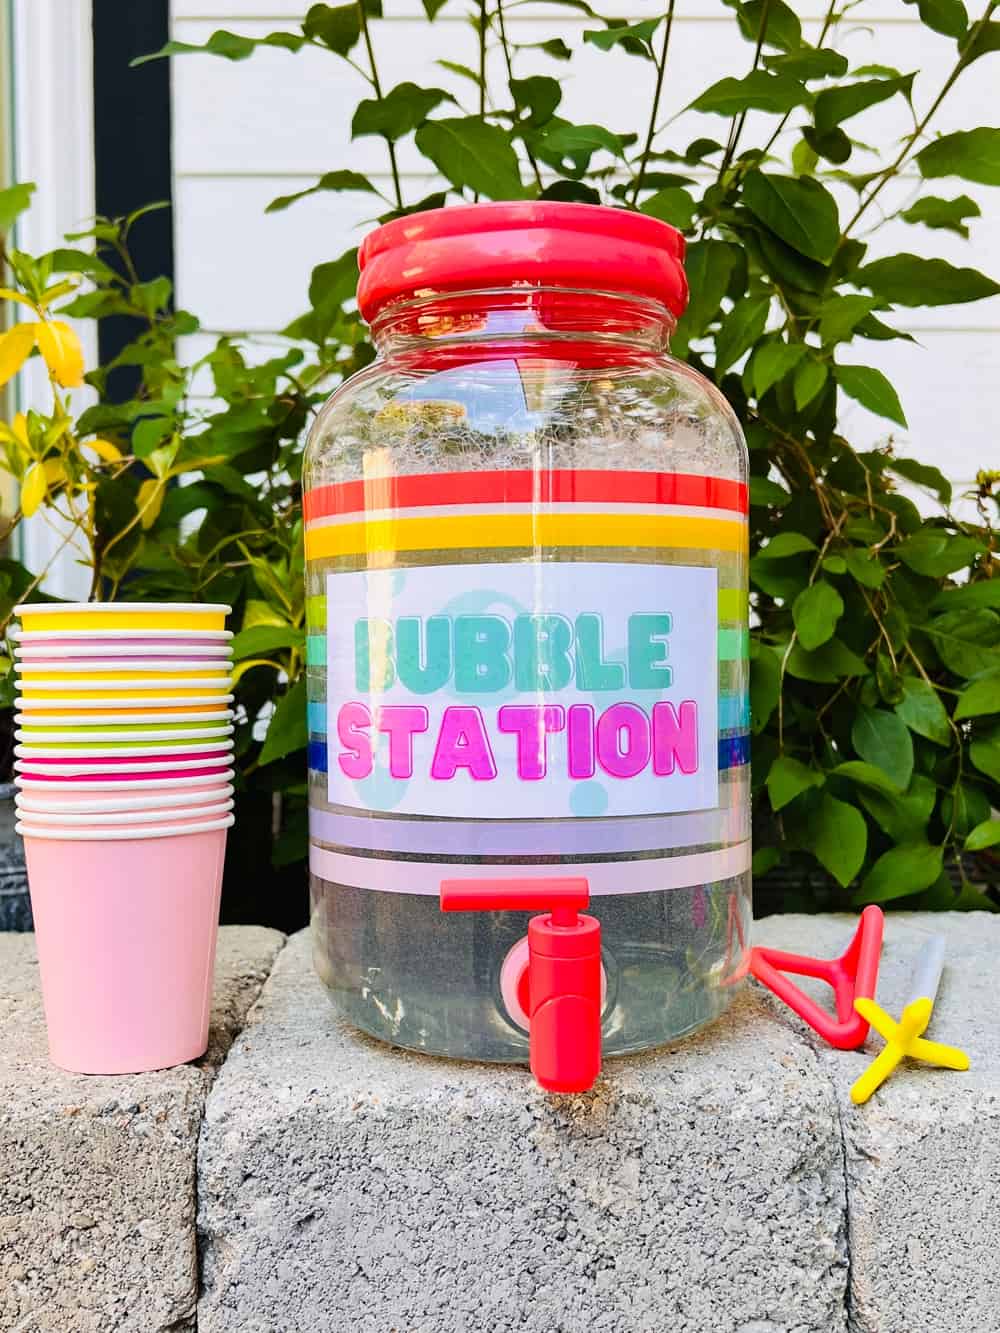 bubble refill station